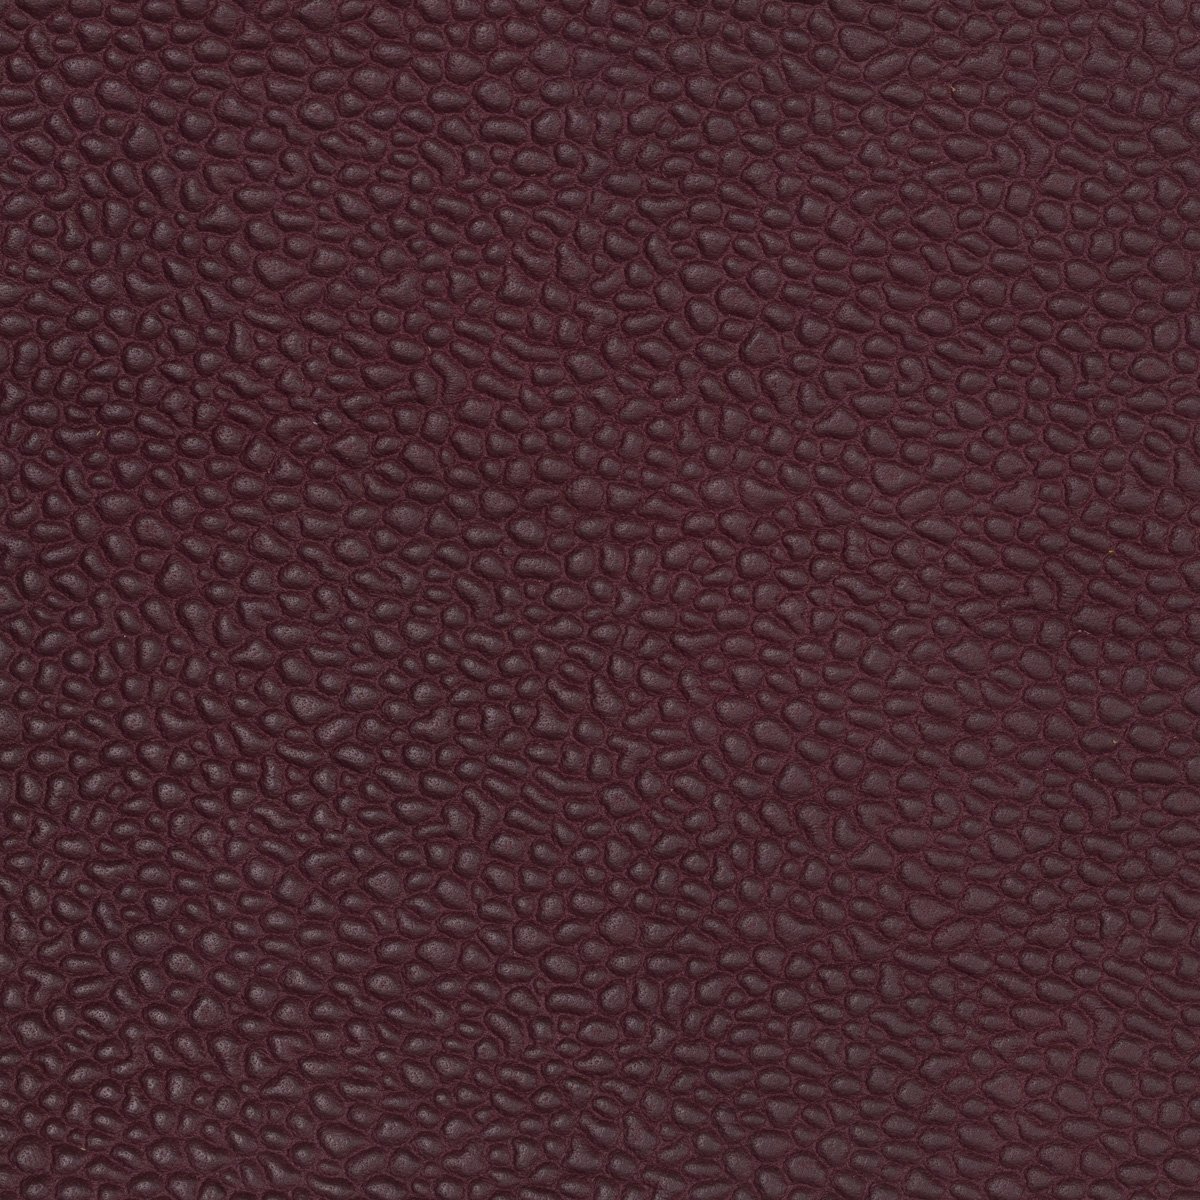 J.FitzPatrick Footwear Burgundy Scotch Grain Leather